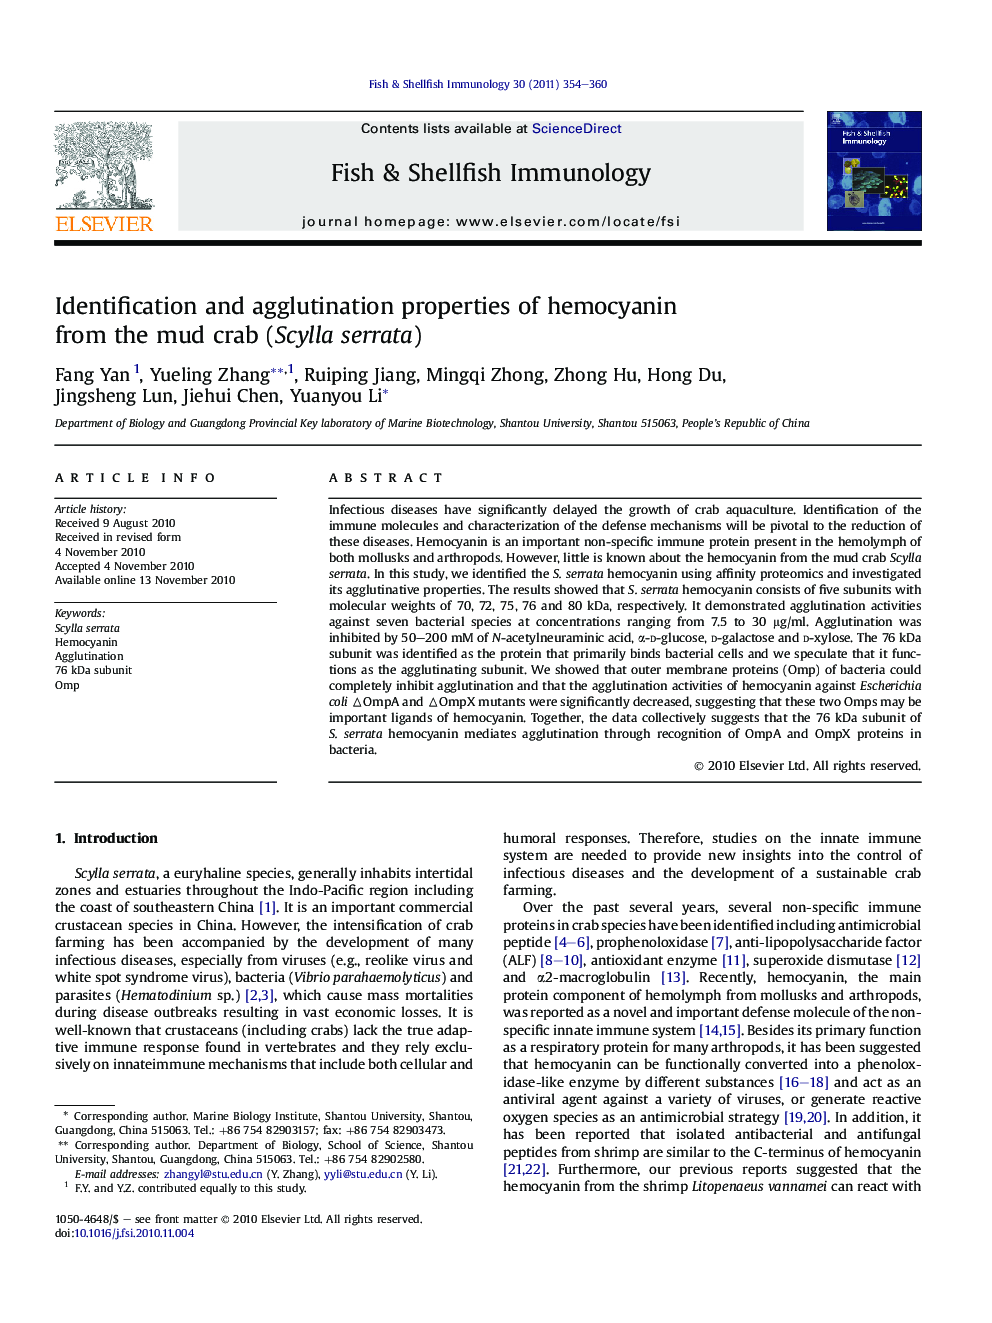 Identification and agglutination properties of hemocyanin from the mud crab (Scylla serrata)